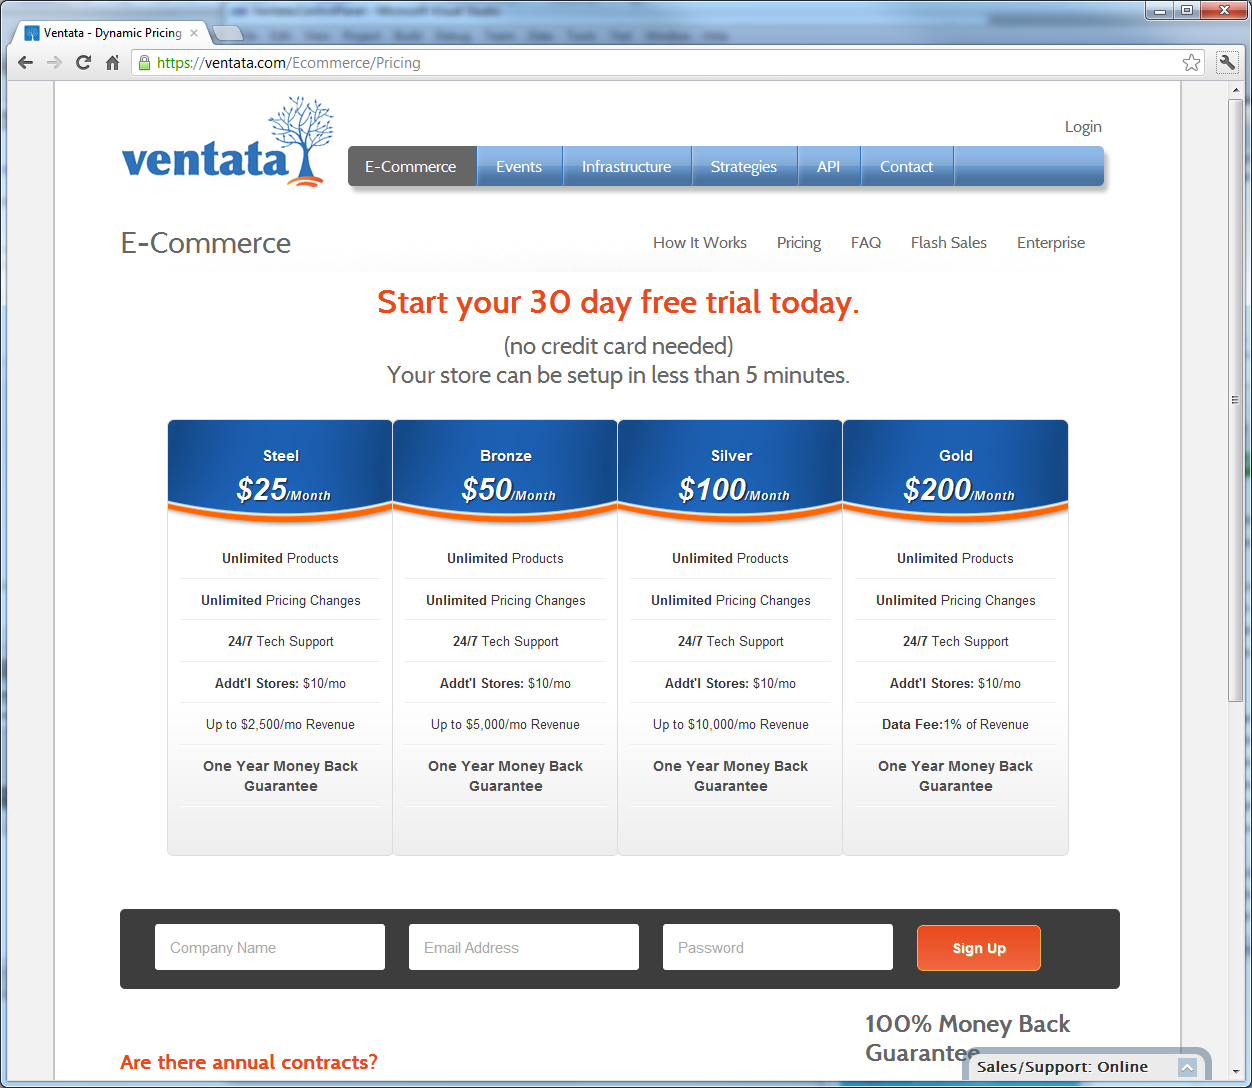 Ventata Dynamic Pricing Woocommerce Preview Wordpress Plugin - Rating, Reviews, Demo & Download